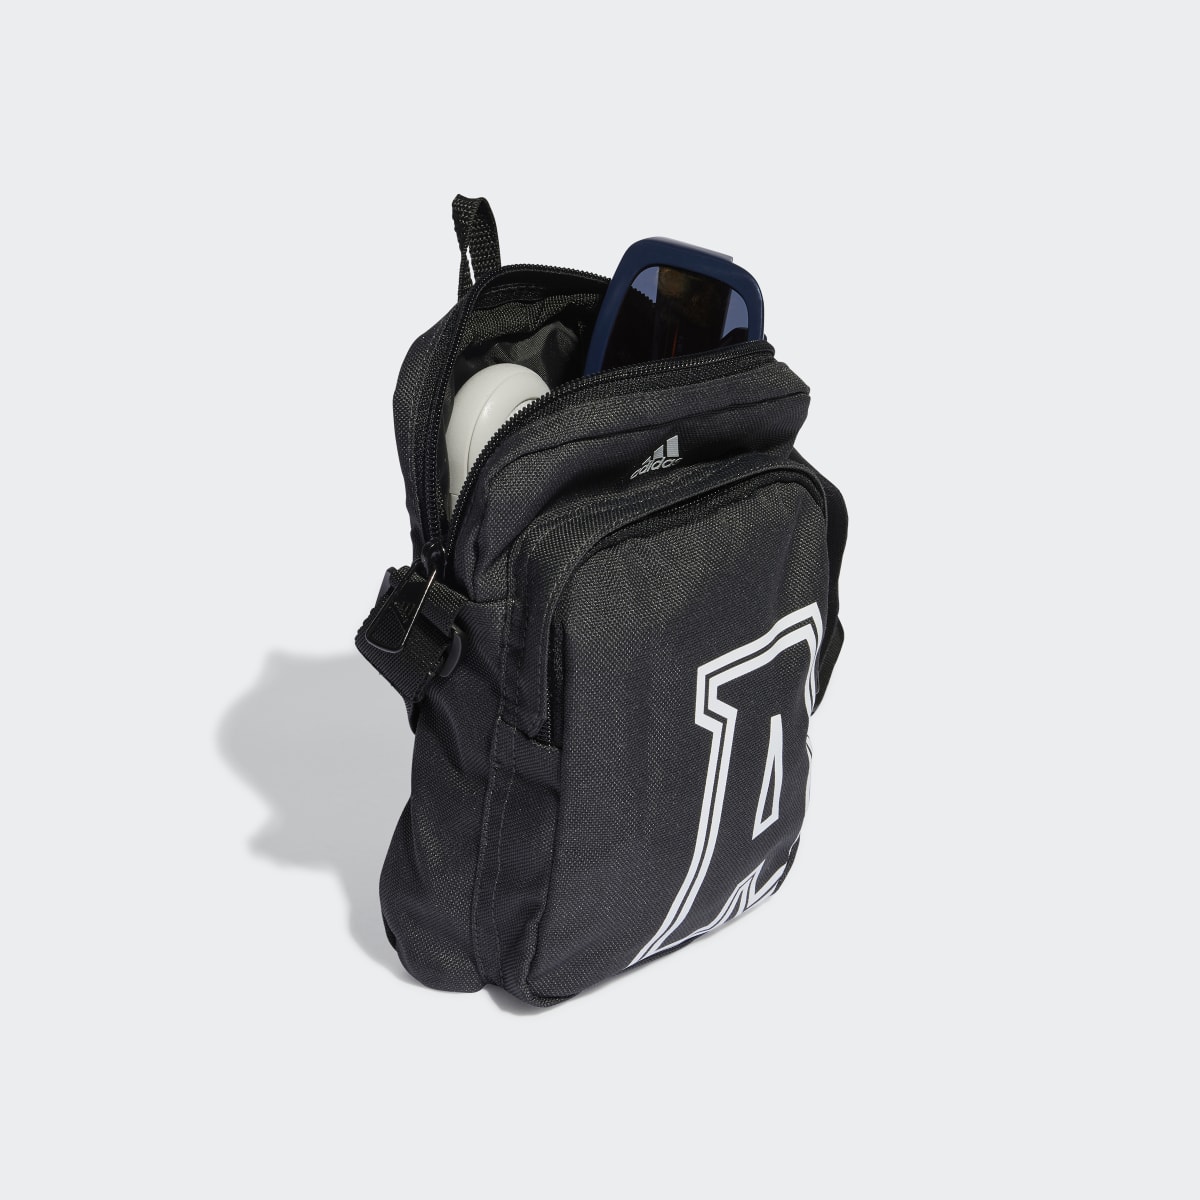 Adidas Classic Brand Love Initial Print Organizer Bag. 5